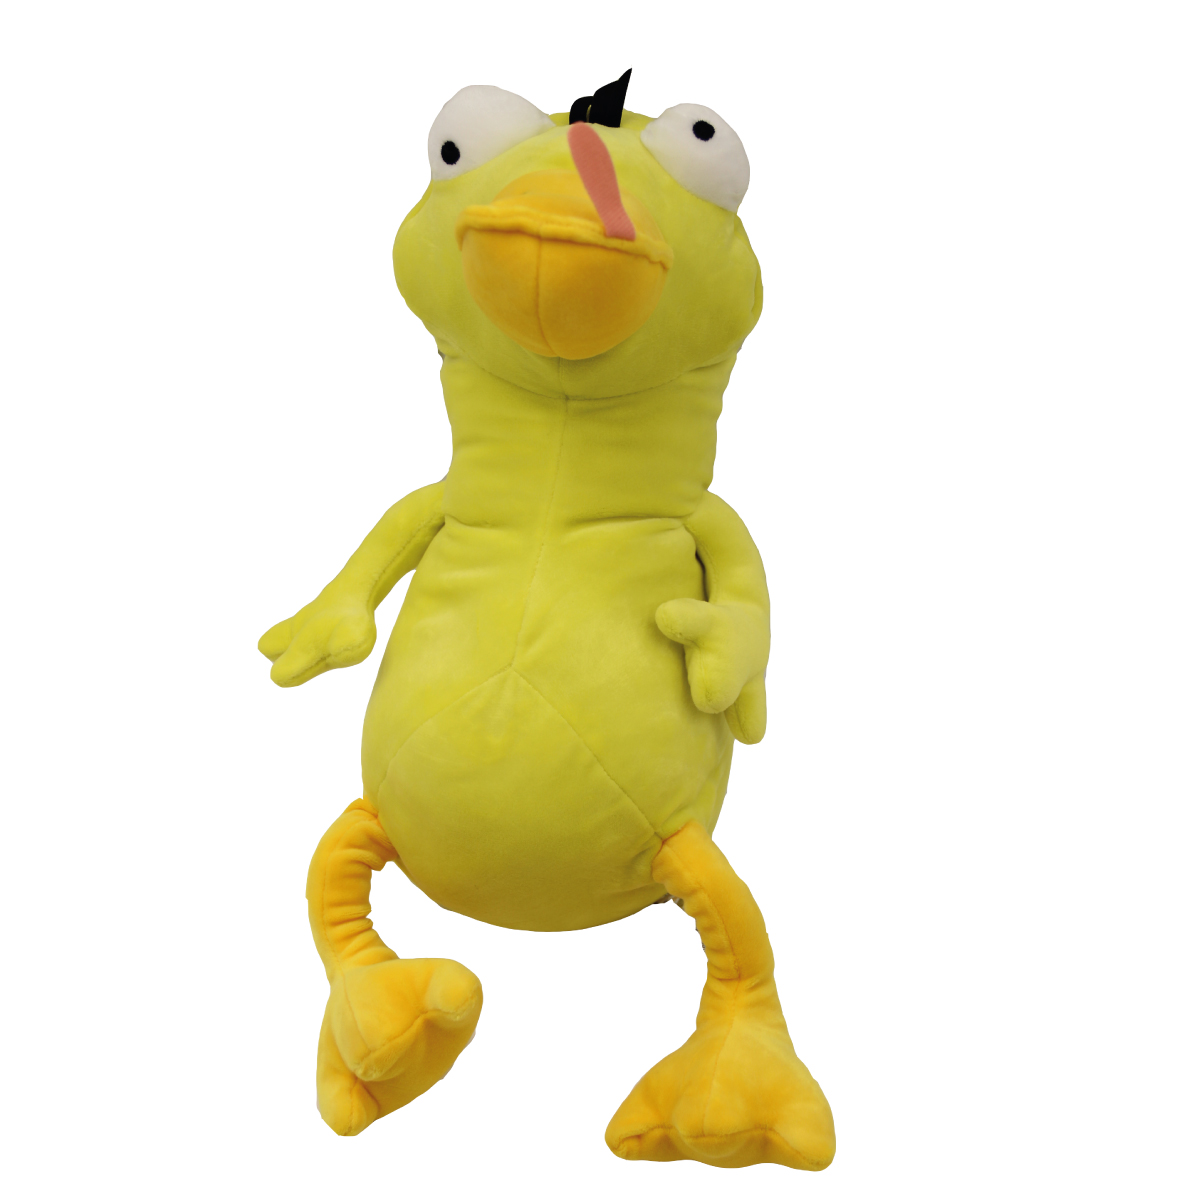 Stuffed Toy - Duckling